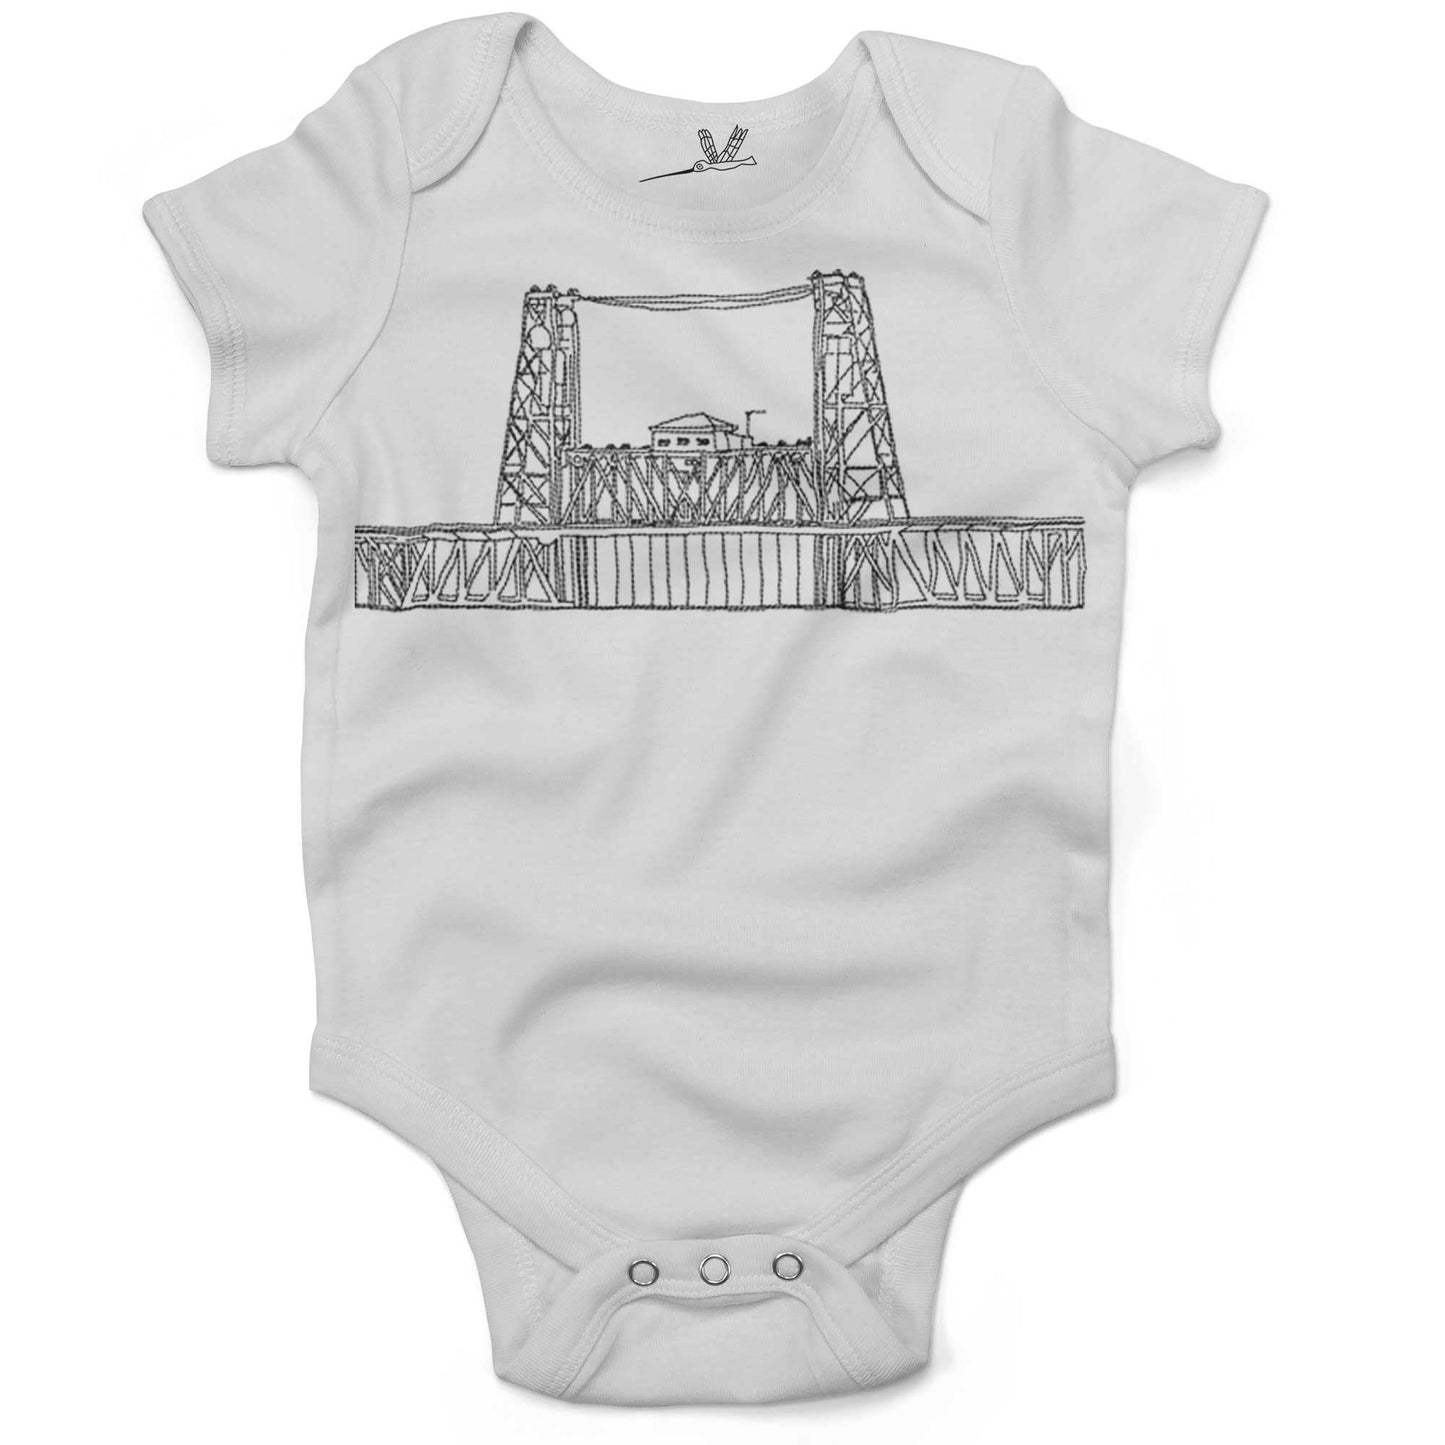 Steel Bridge Infant Bodysuit or Raglan Baby Tee-White-3-6 months